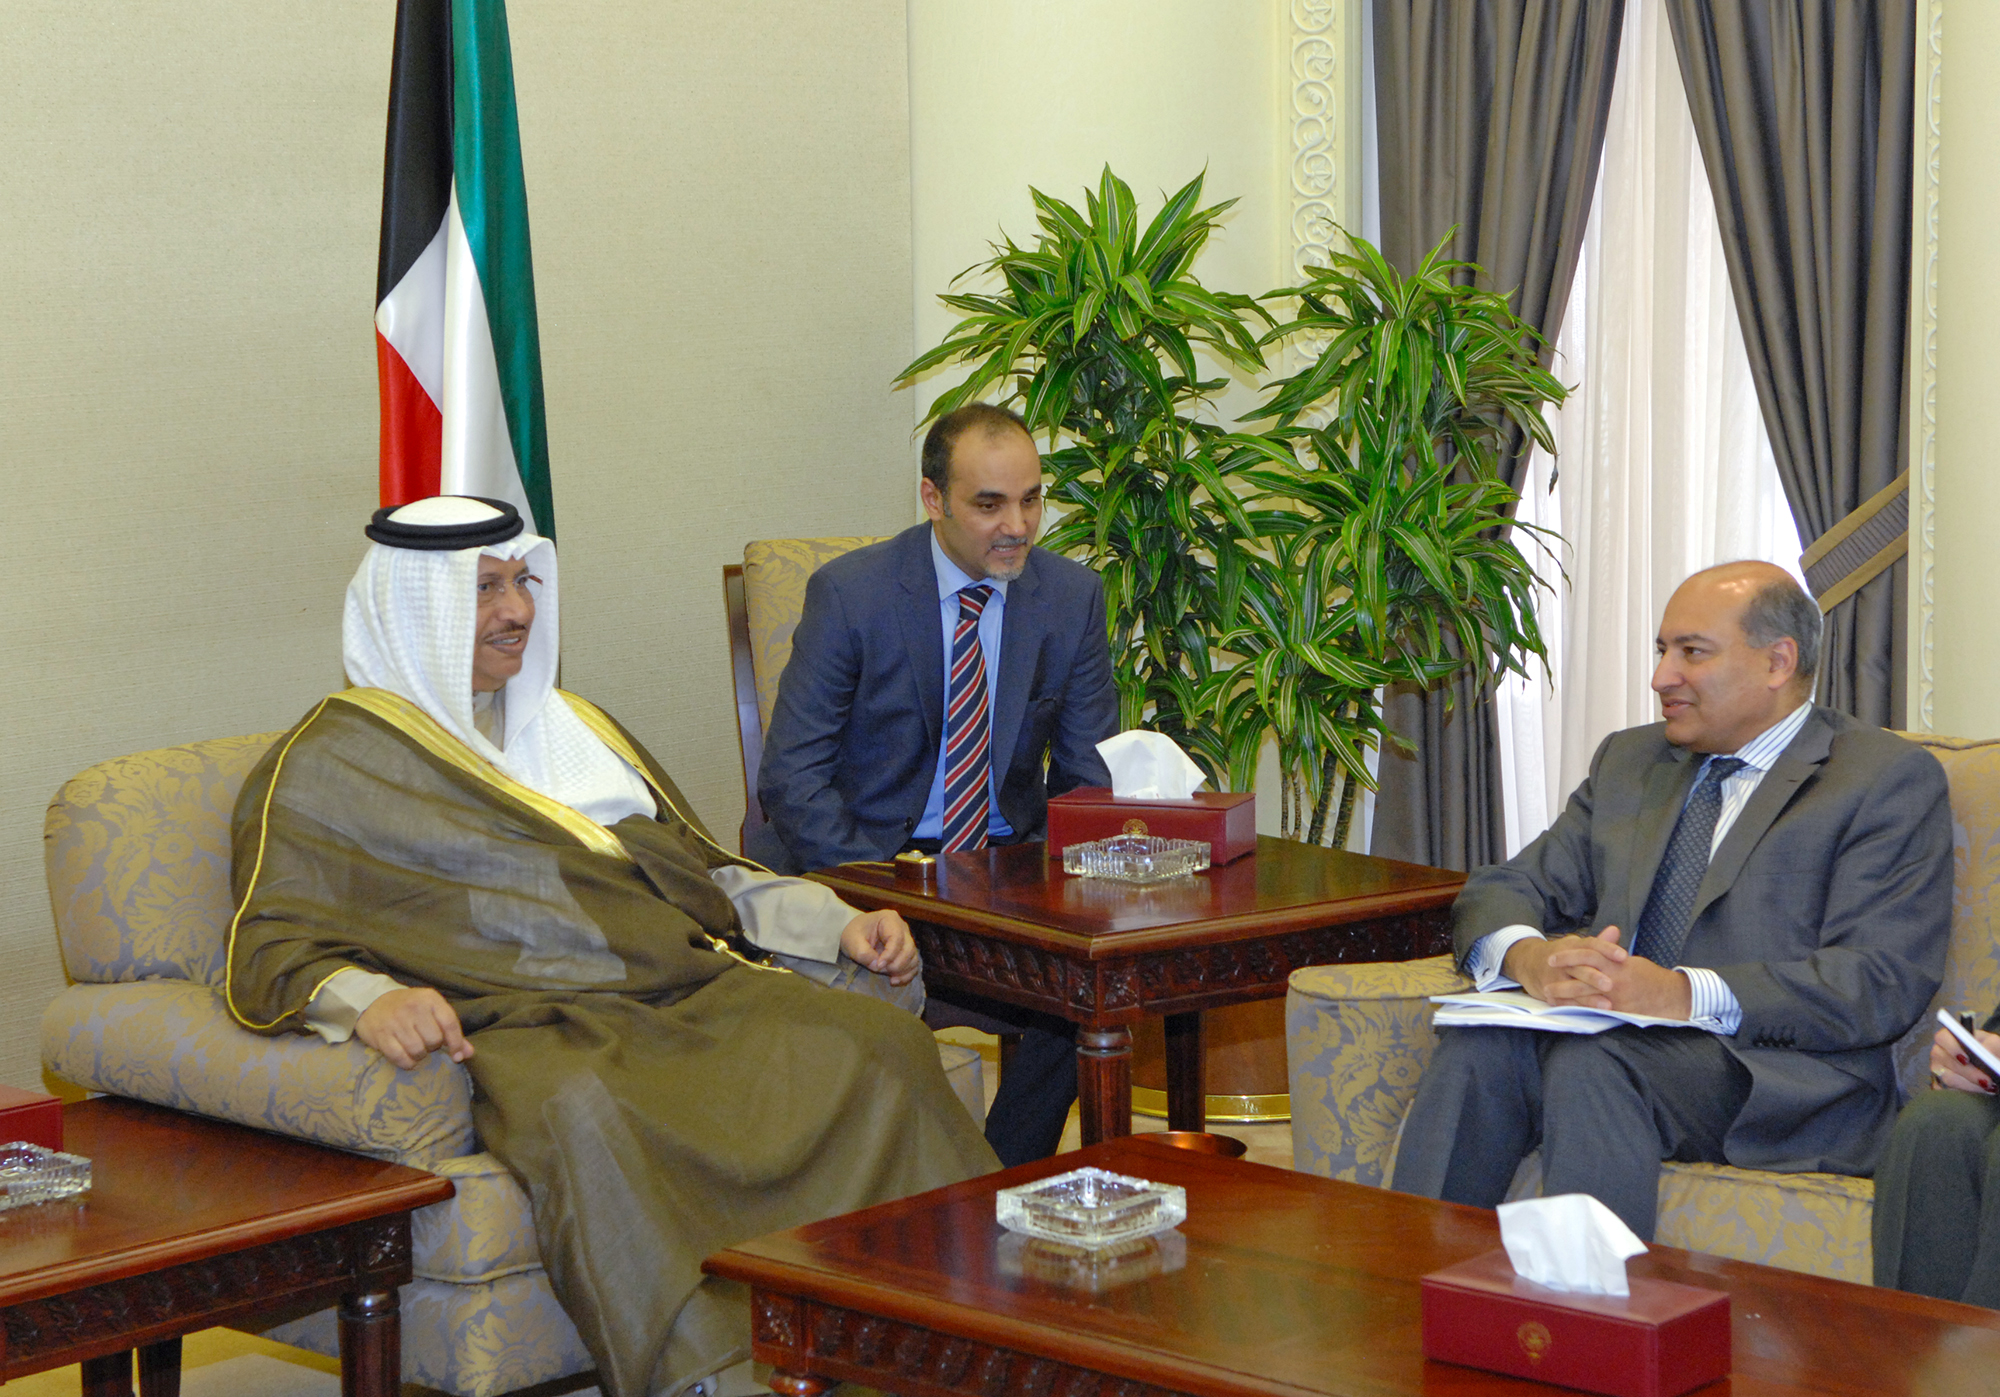 His Highness the Prime Minister Sheikh Jaber Al-Mubarak Al-Hamad Al-Sabah recieves President of the European Bank for Reconstruction and Development Sir Suma Chakrabarti